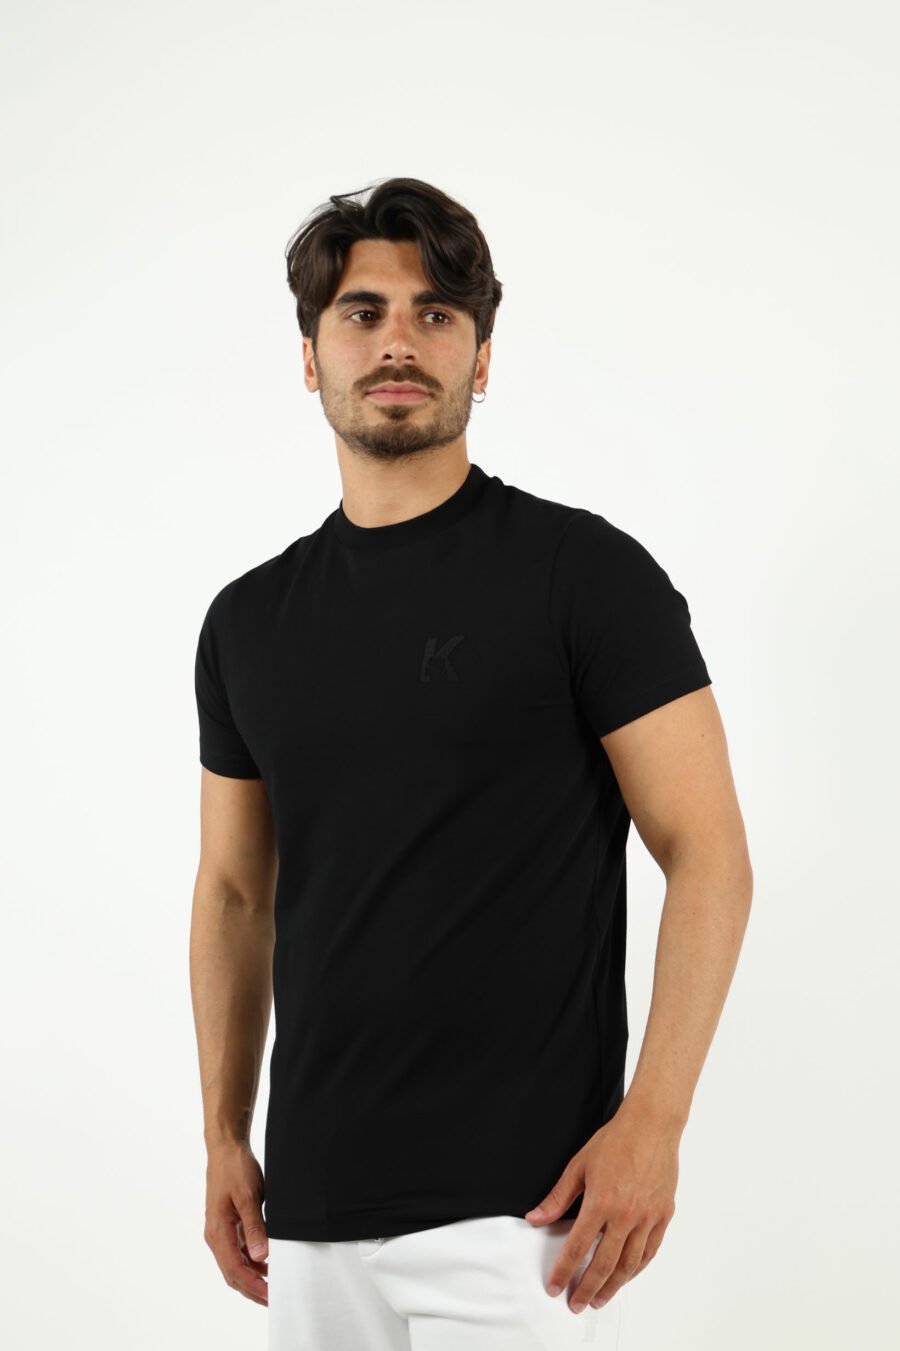 Camiseta negra con minilogo negro en goma - number14141